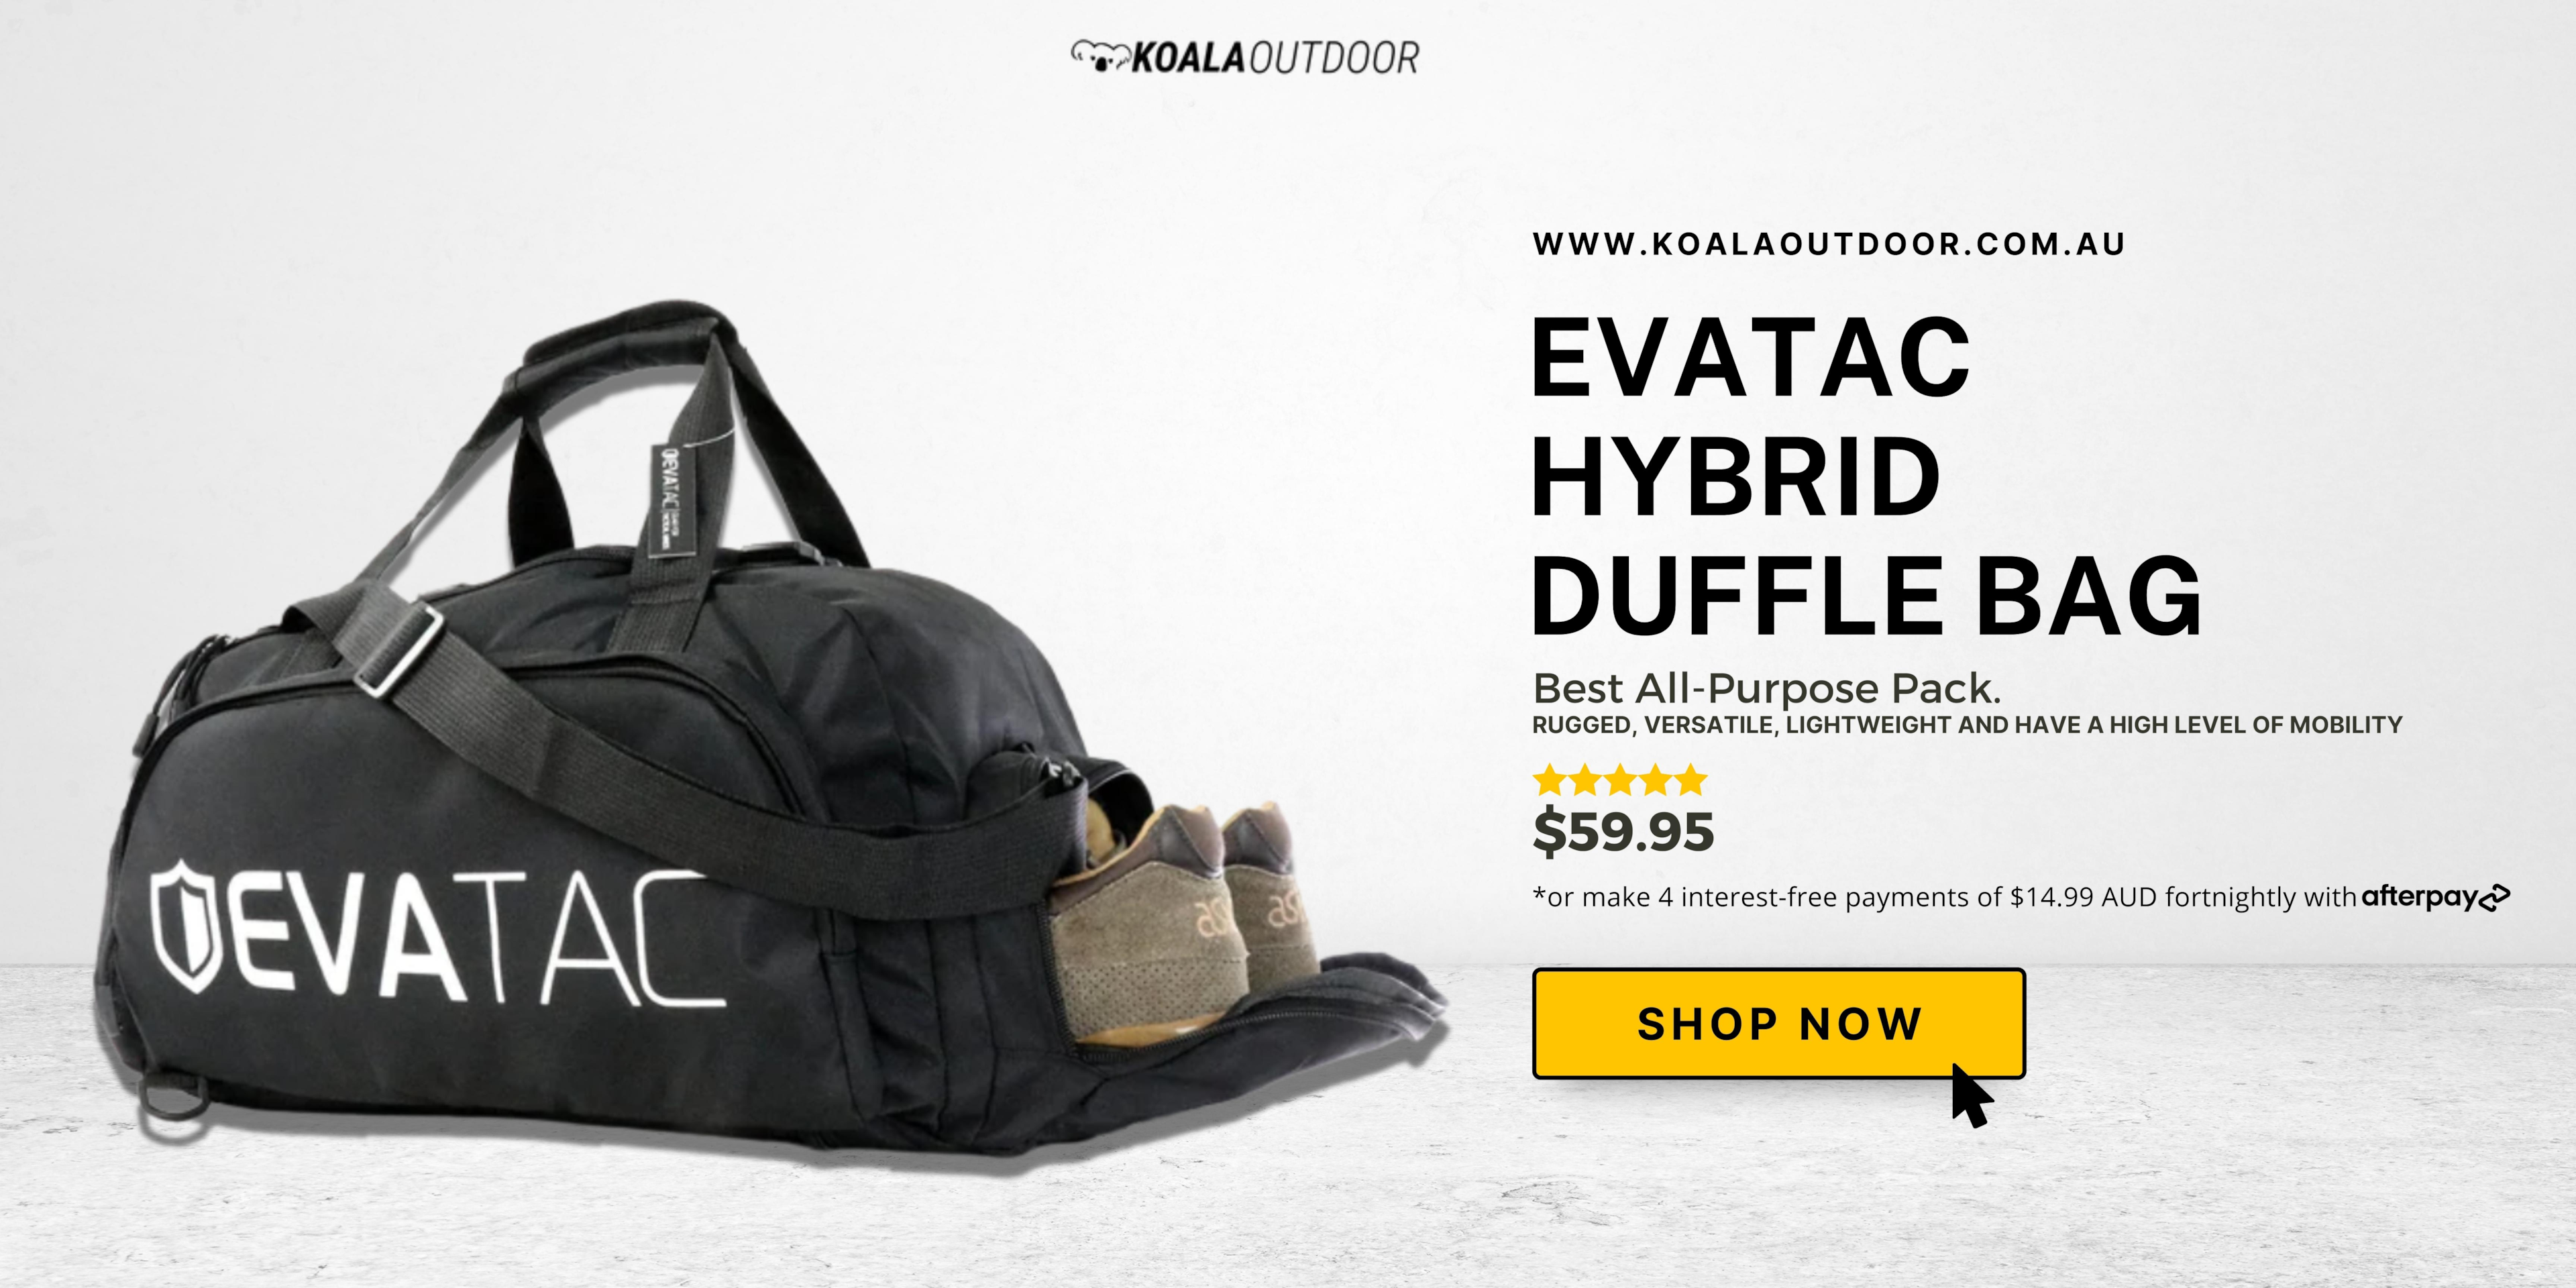 Evatac duffle bag durable exterior shoulder straps